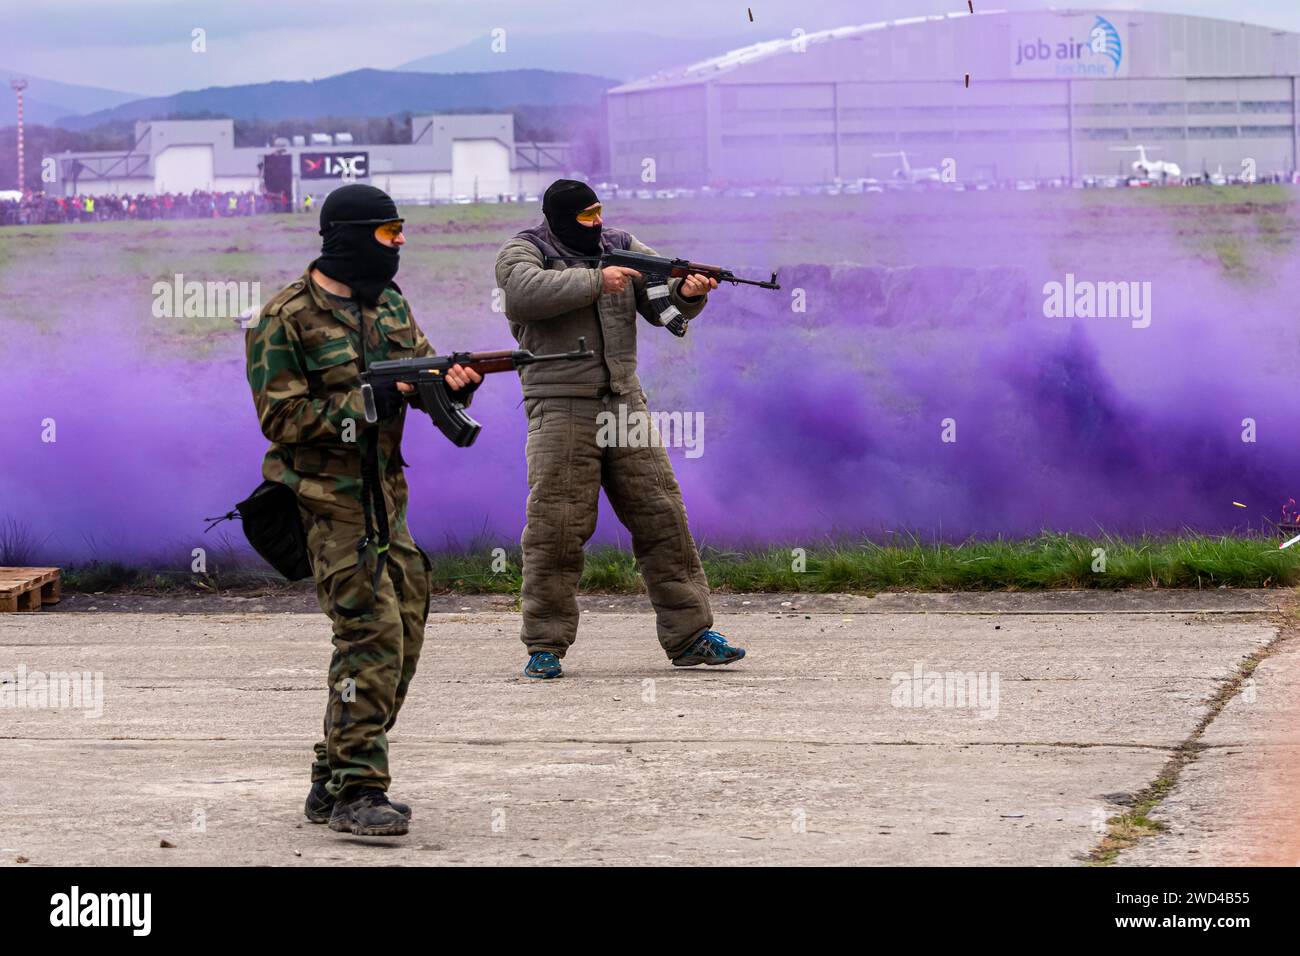 Terrorist insurgents shooting guns during demonstration at Leoš Janáček Airport in the Czech Republic at an airshow re-enactment. Stock Photo